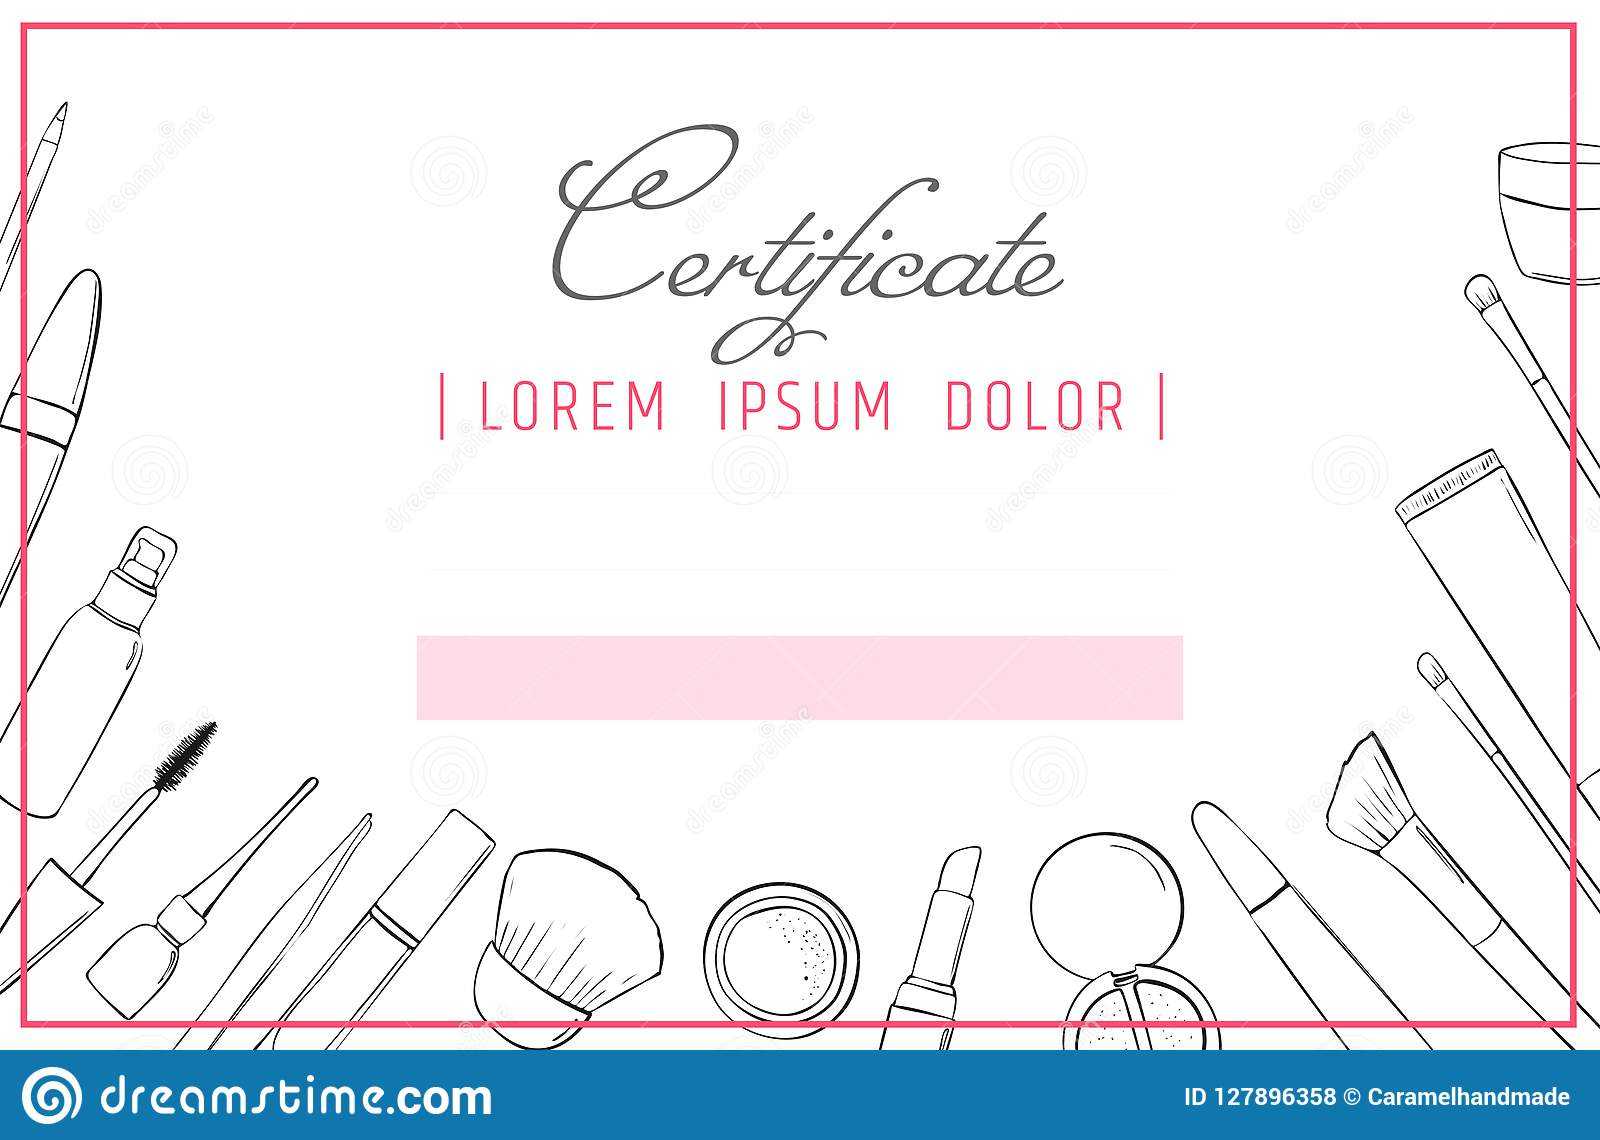 Makeup Certificate Template. Beauty School Or Refresher For Beautiful Certificate Templates